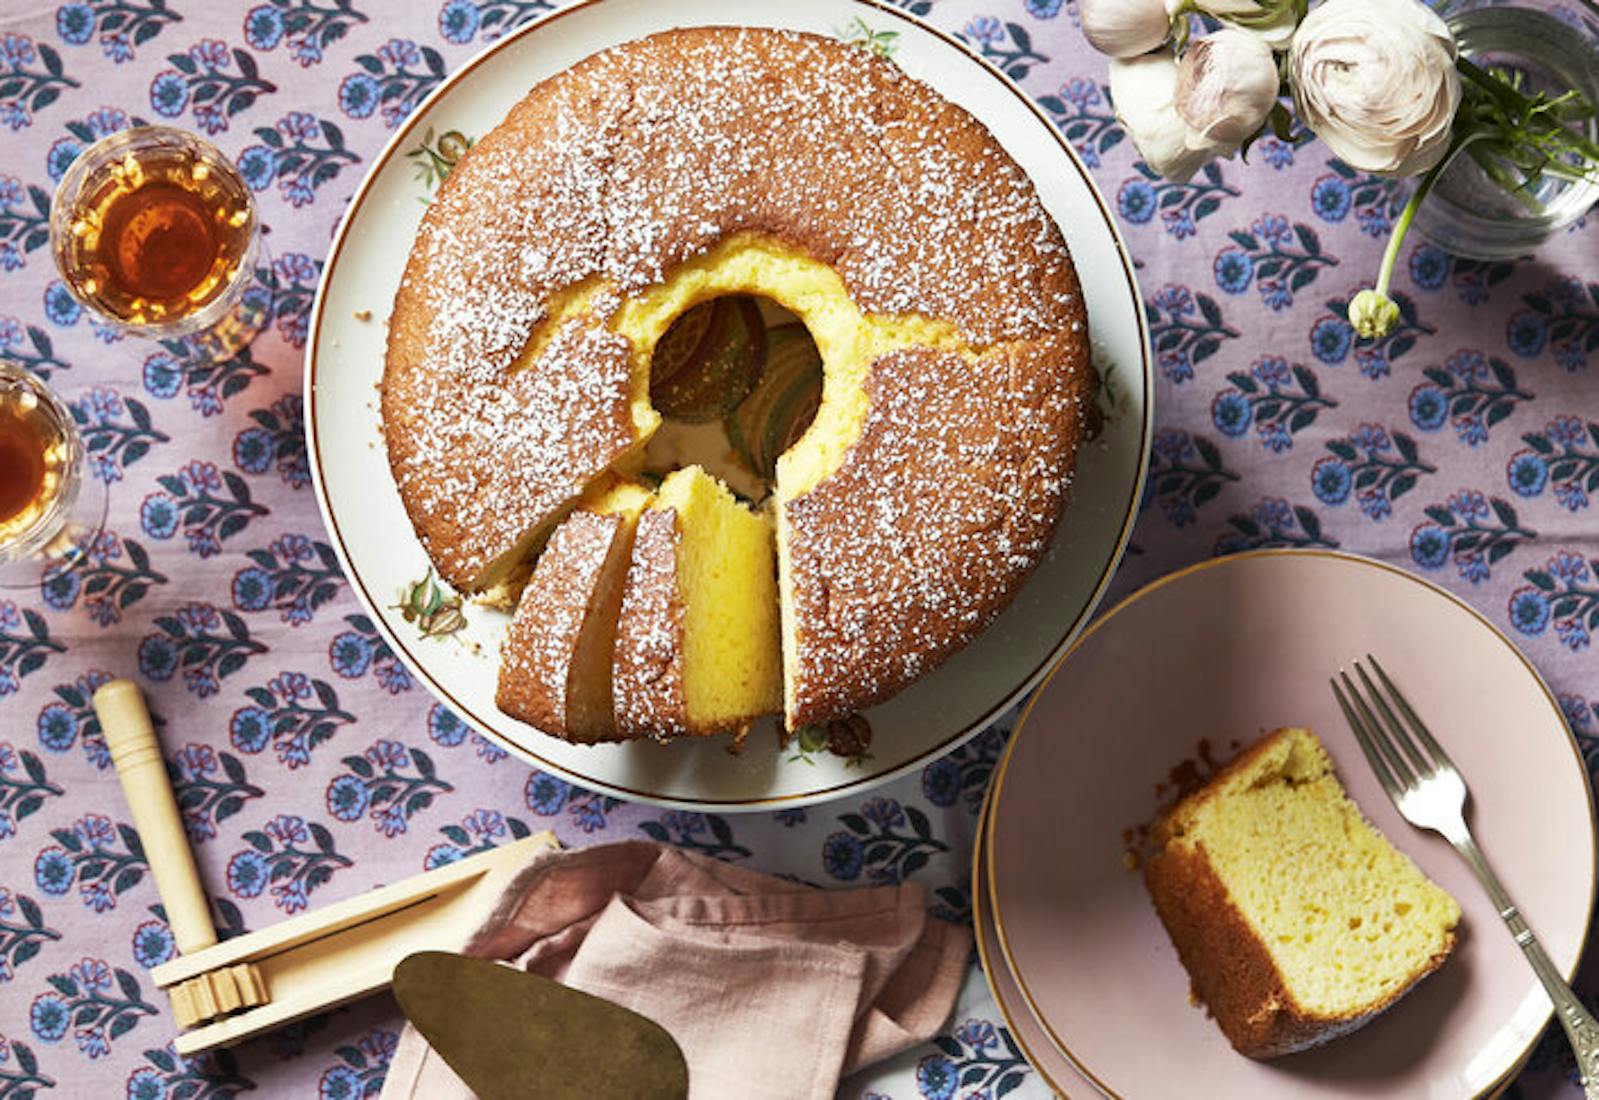 Passover Hazelnut Sponge Cake (Pan di Spagna Alle Nocciole)